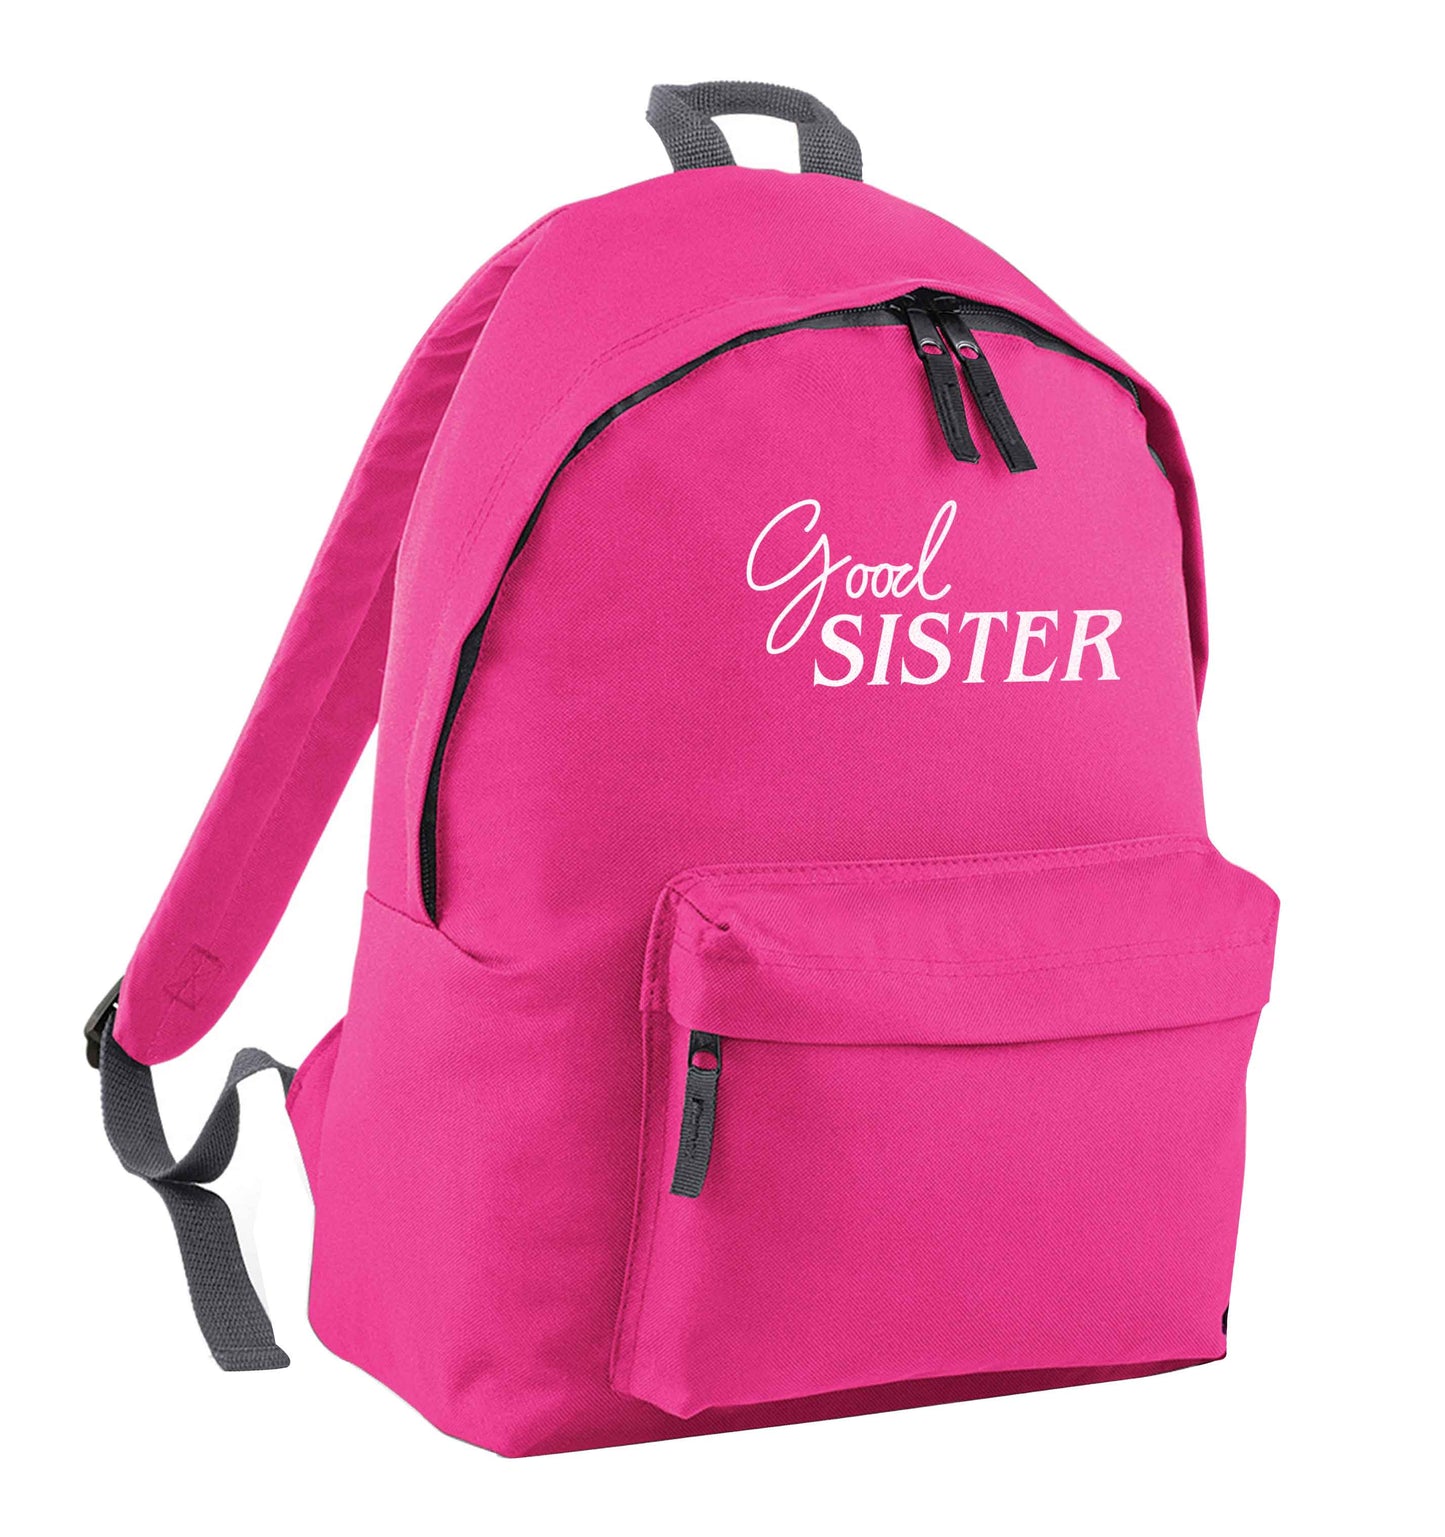 Good sister pink children's backpack